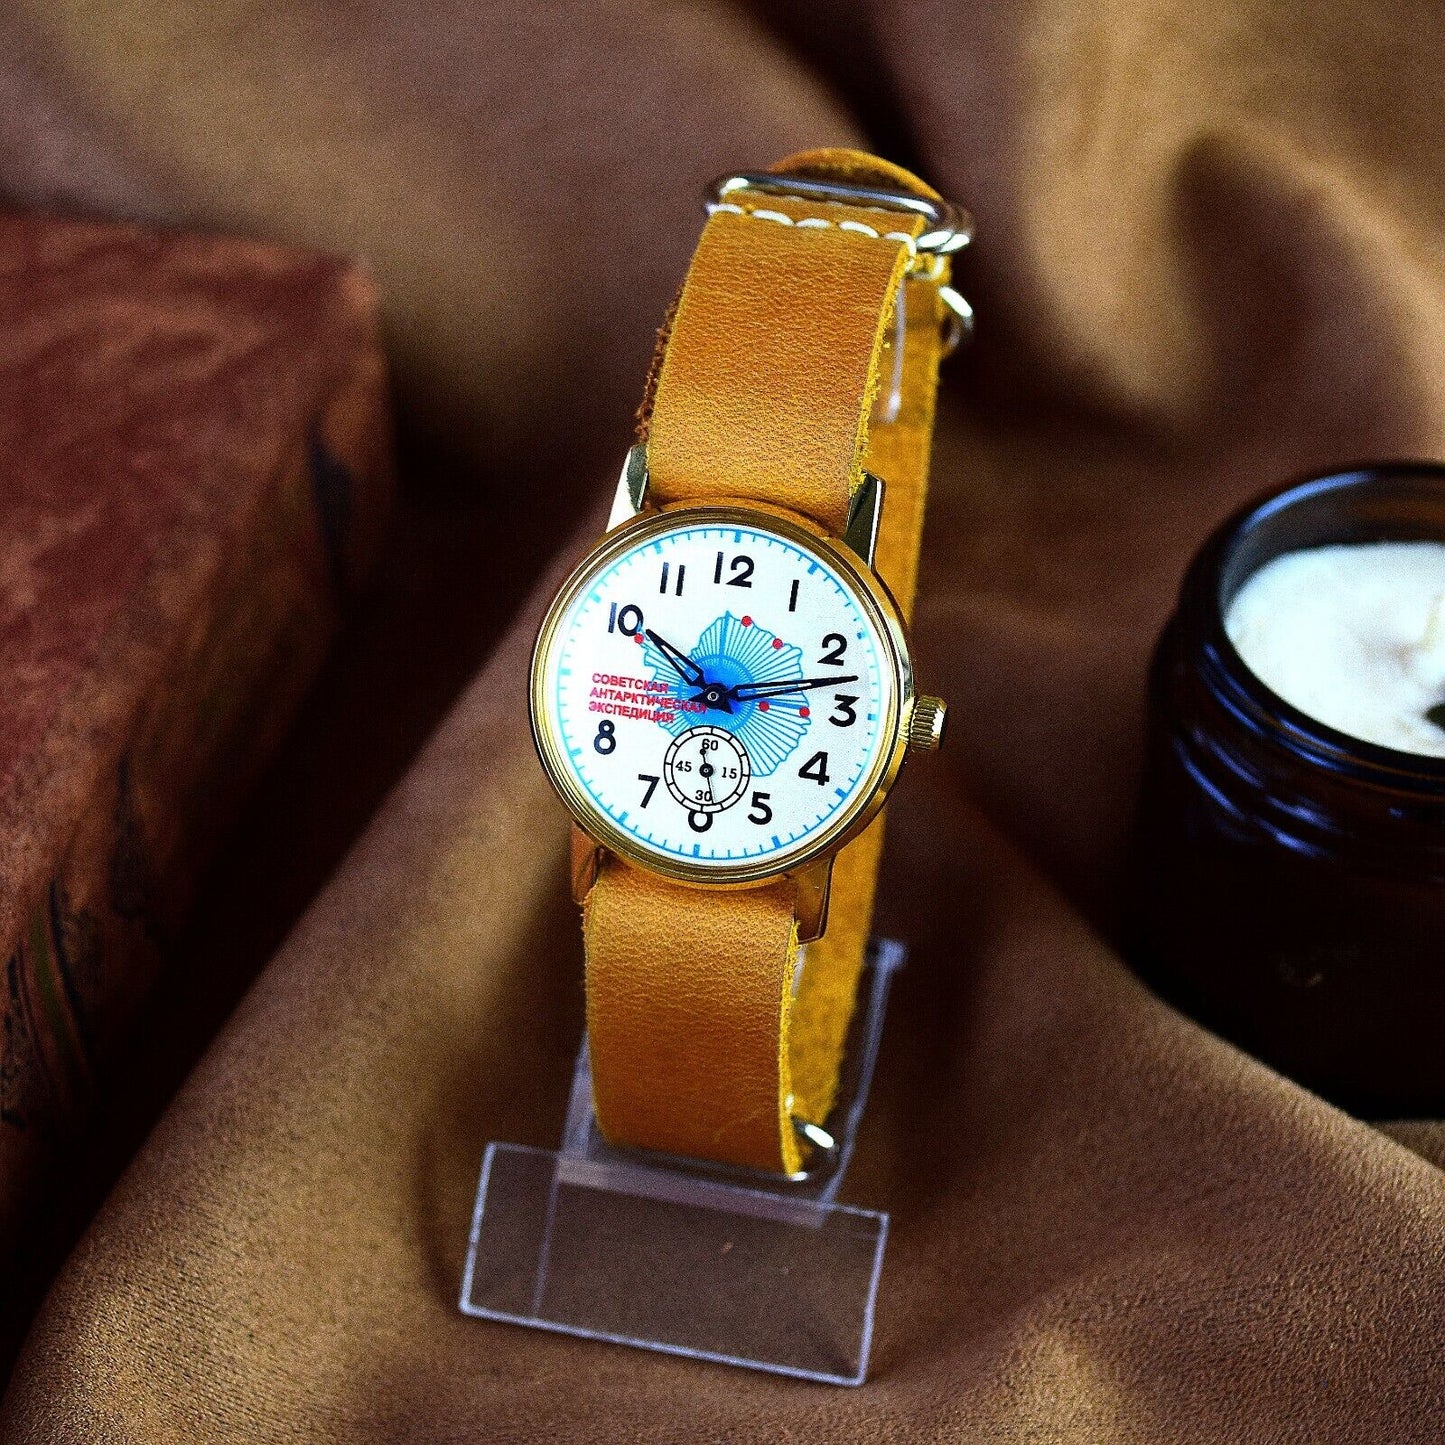 Soviet Watch Vintage Pobeda Soviet Antarctic Expedition Mechanical Watch USSR